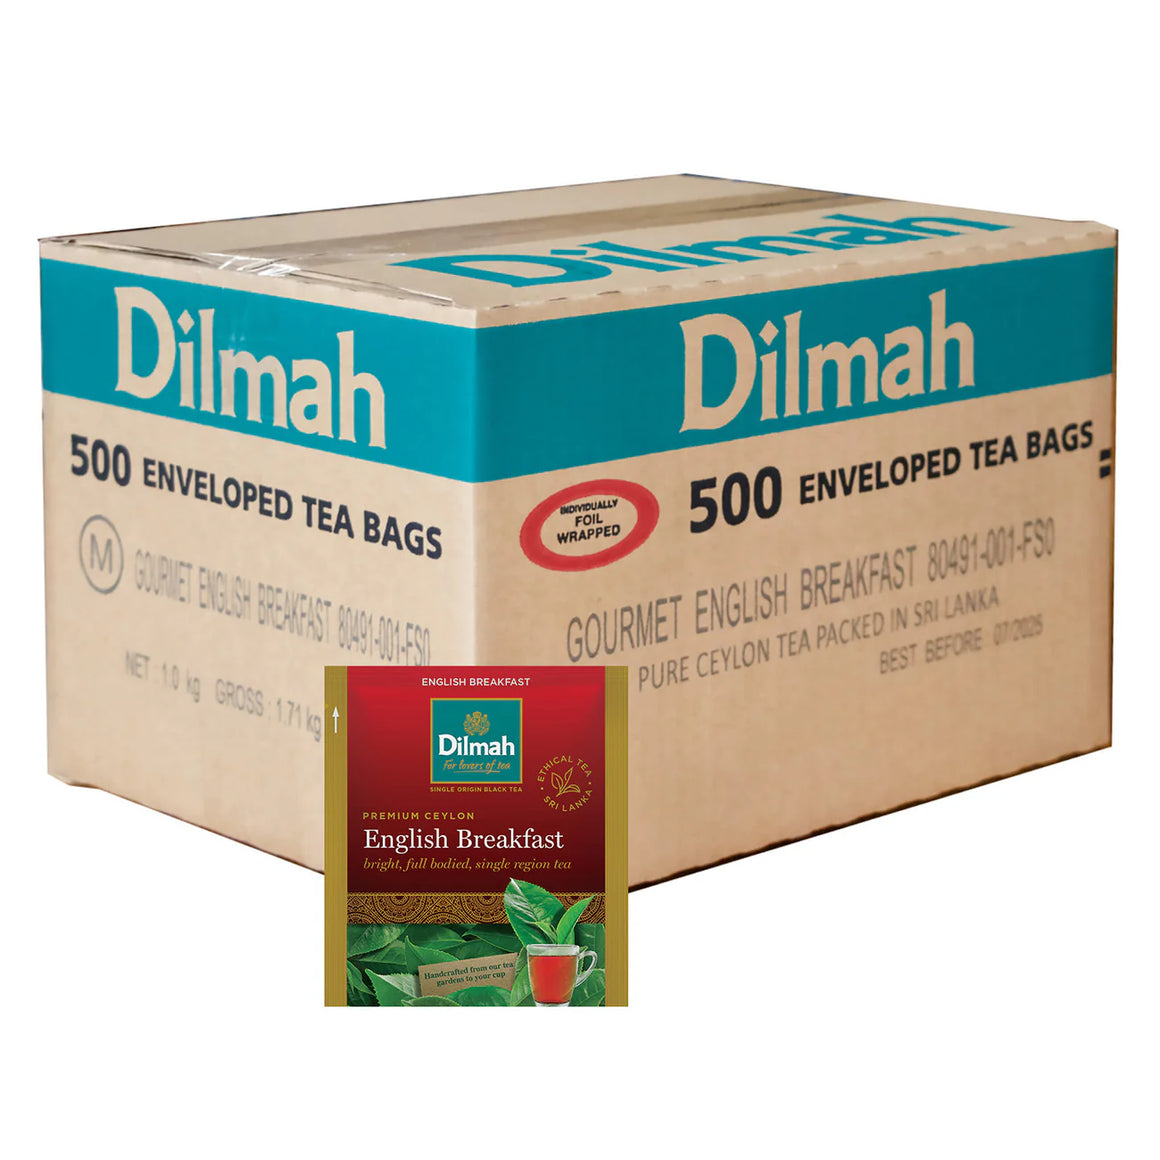 Dilmah English Breakfast Black Tea
500 Foil Enveloped Teabags